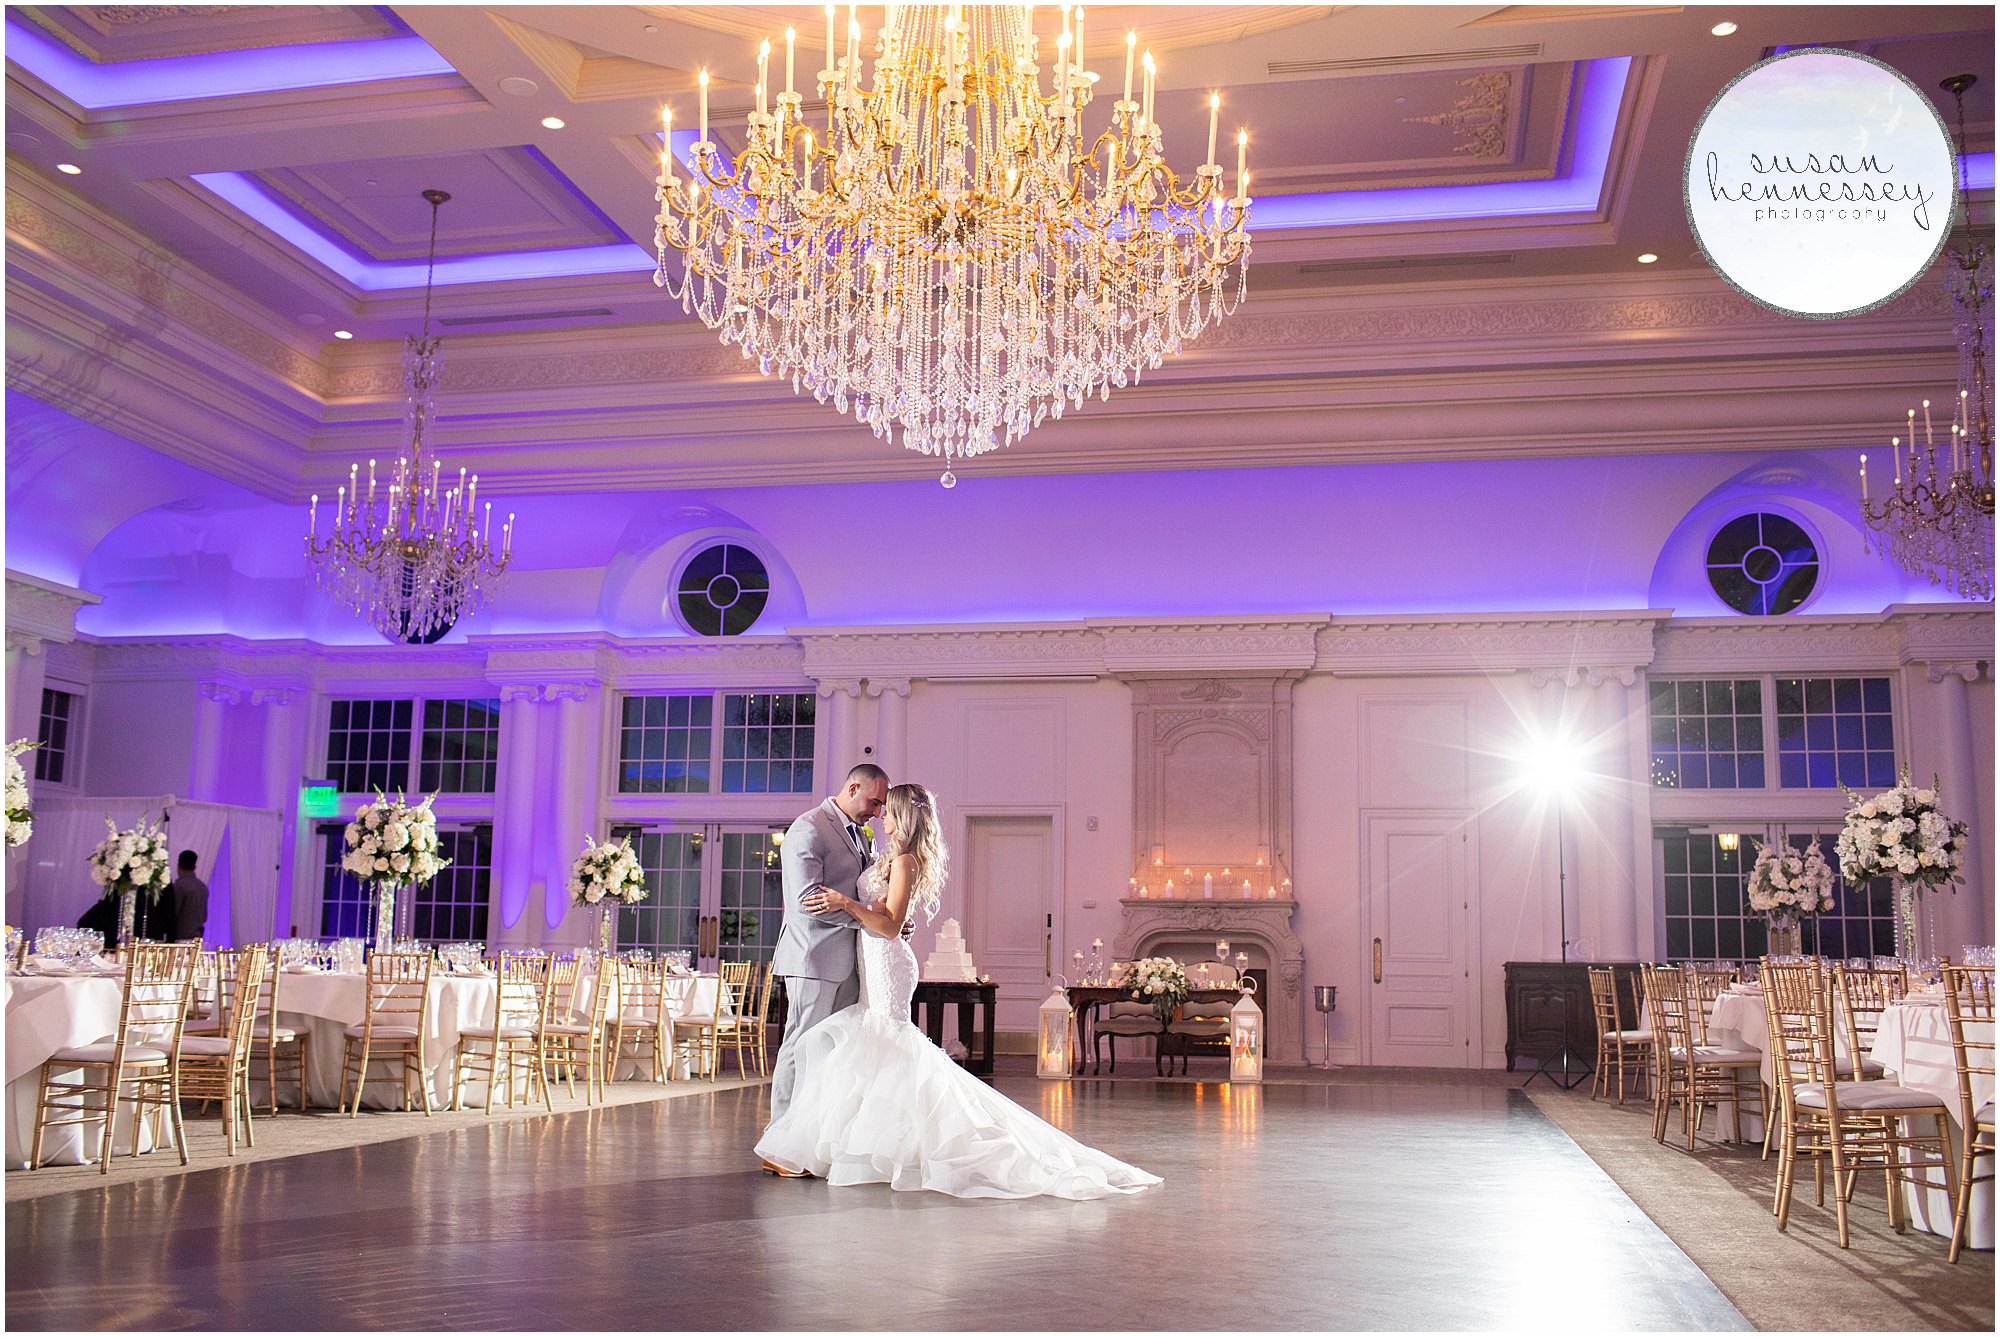 Romantic photo of bride and groom on dance floor.